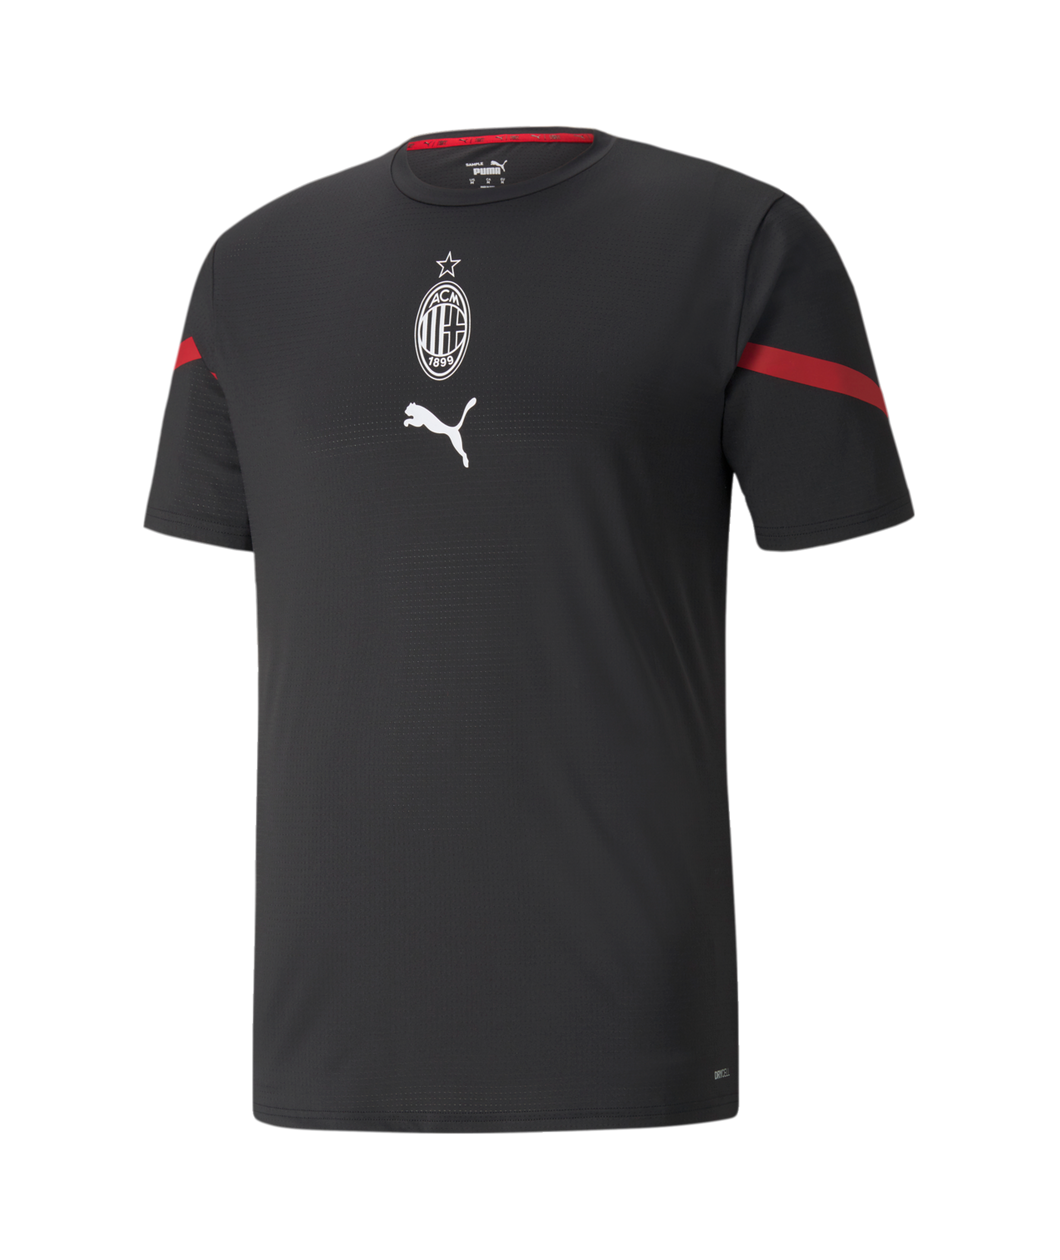 Puma AC Milan Prematch Jersey 2021/2022 764442 05 BLACK/RED/WHITE